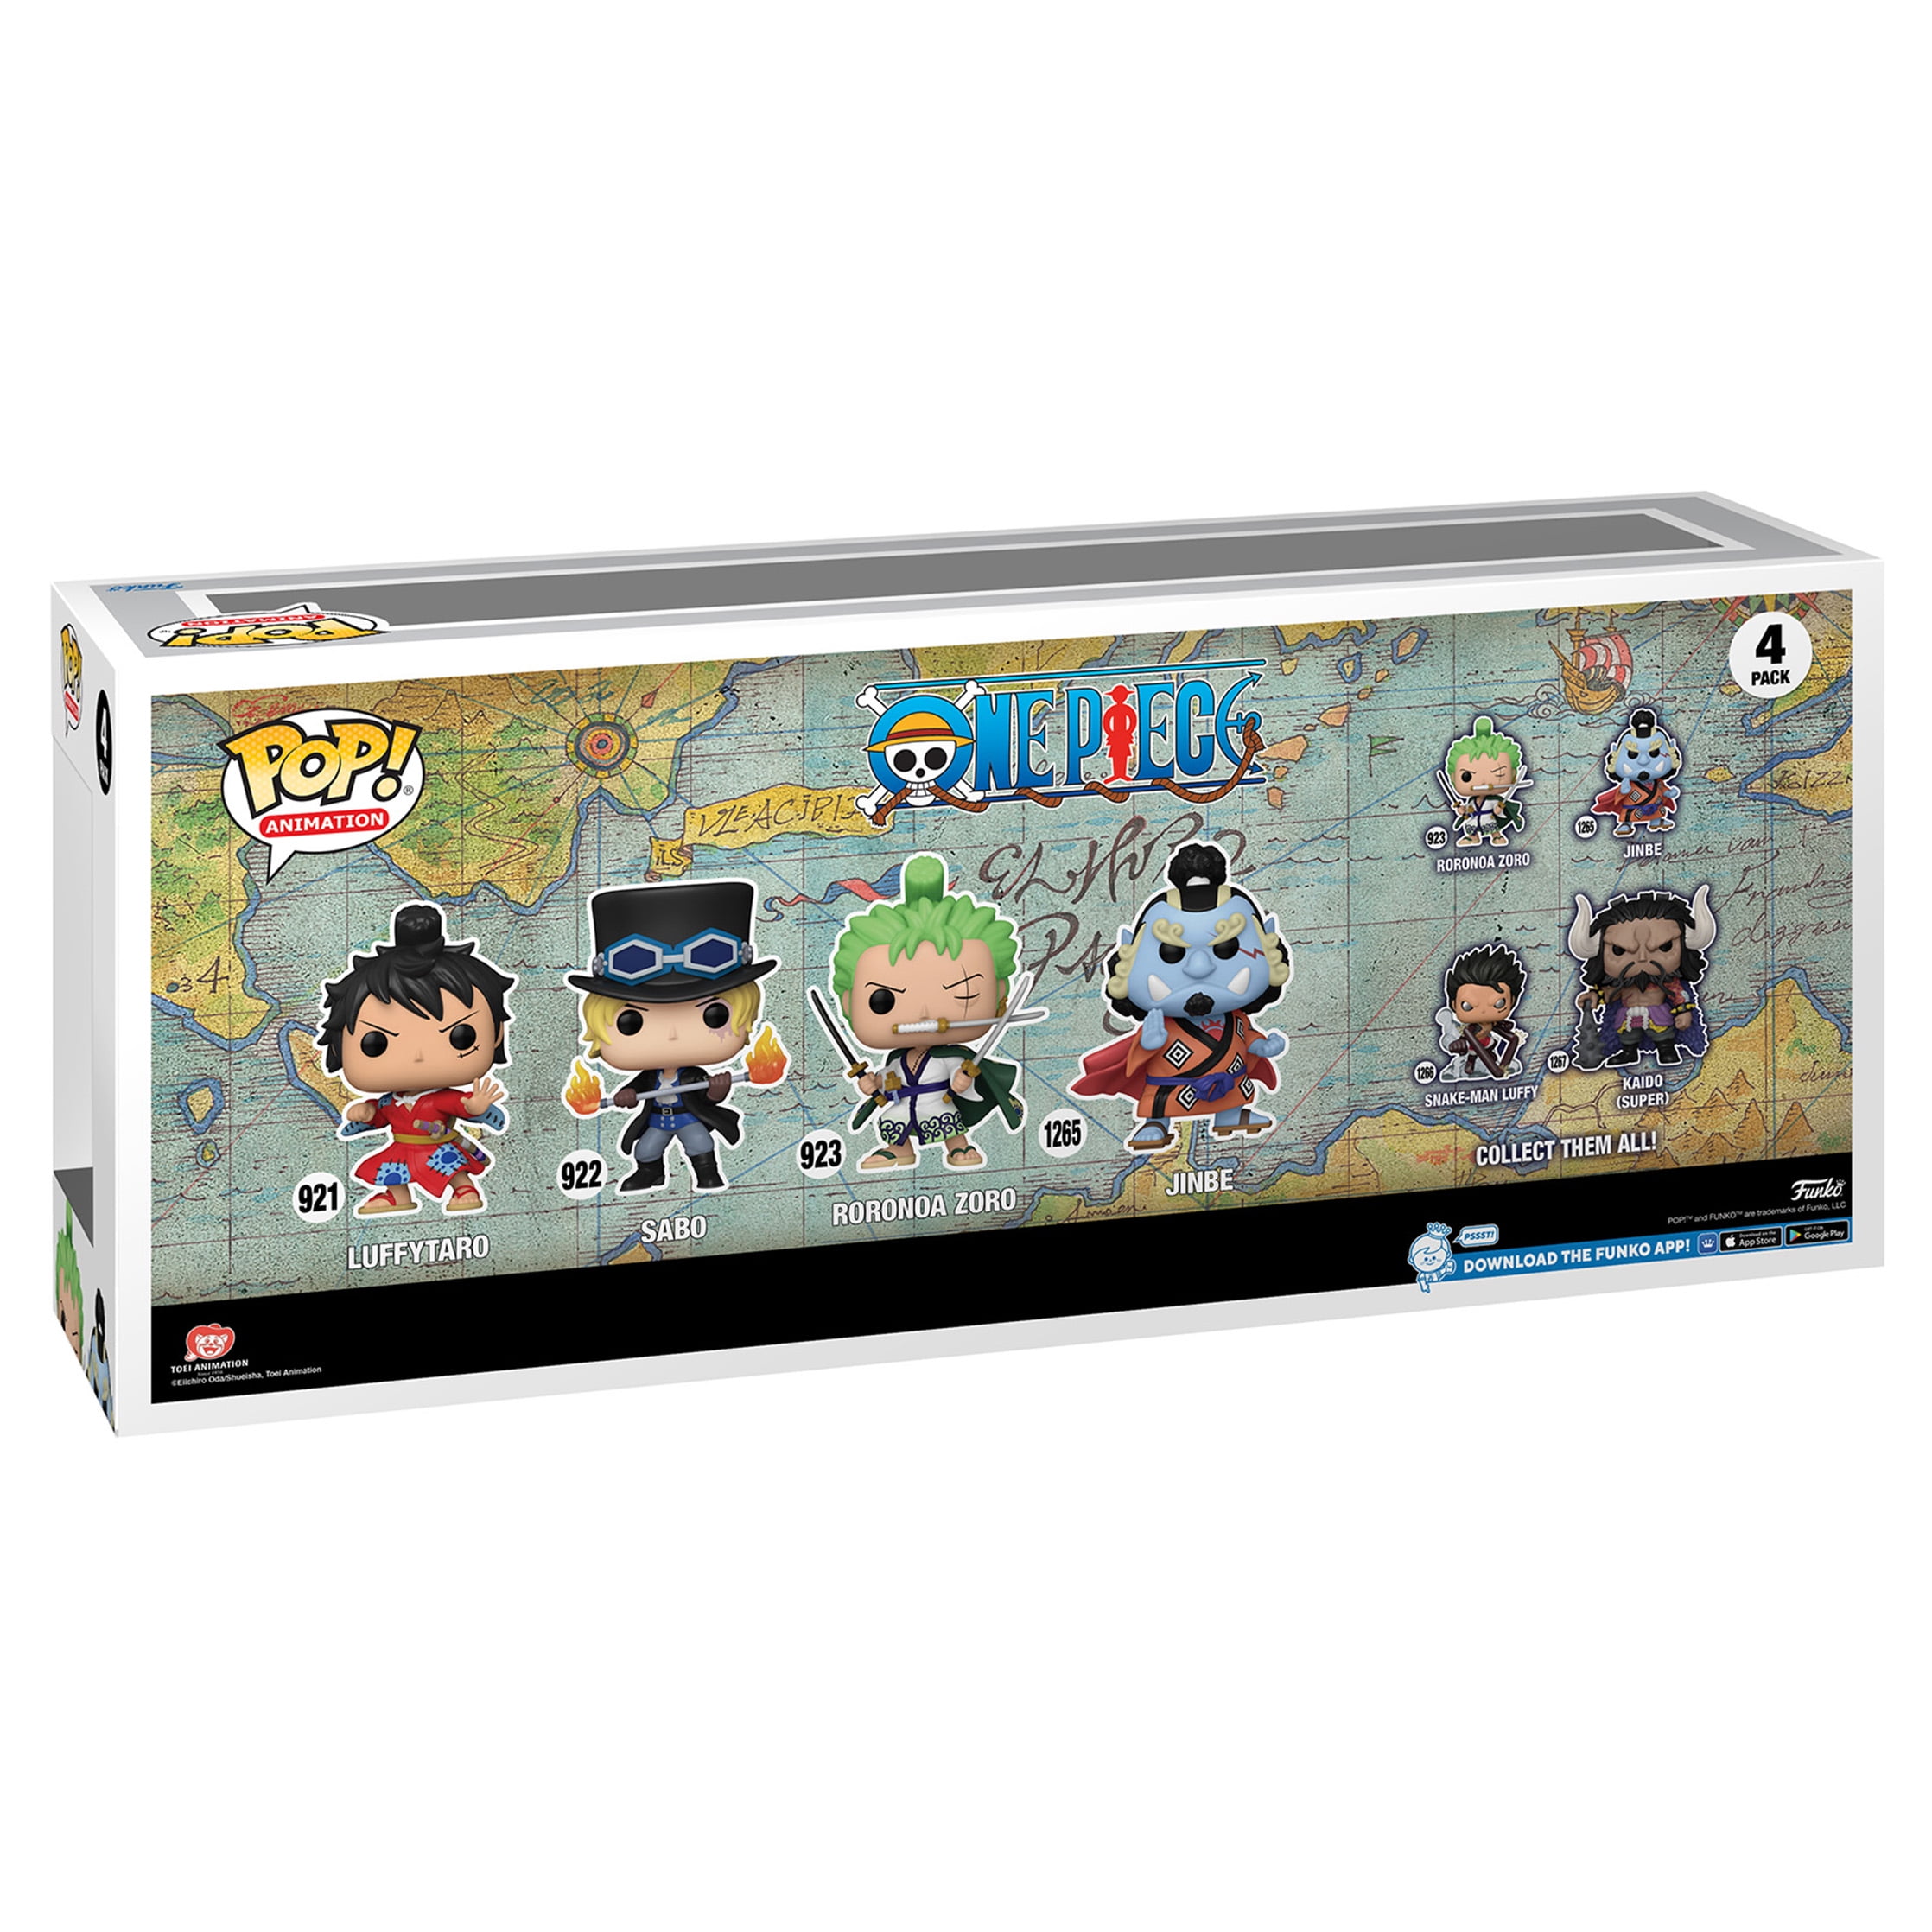 Figurine Pop One Piece pas cher : Luffytaro / Sabo / Zoro / Jinbe - Pack